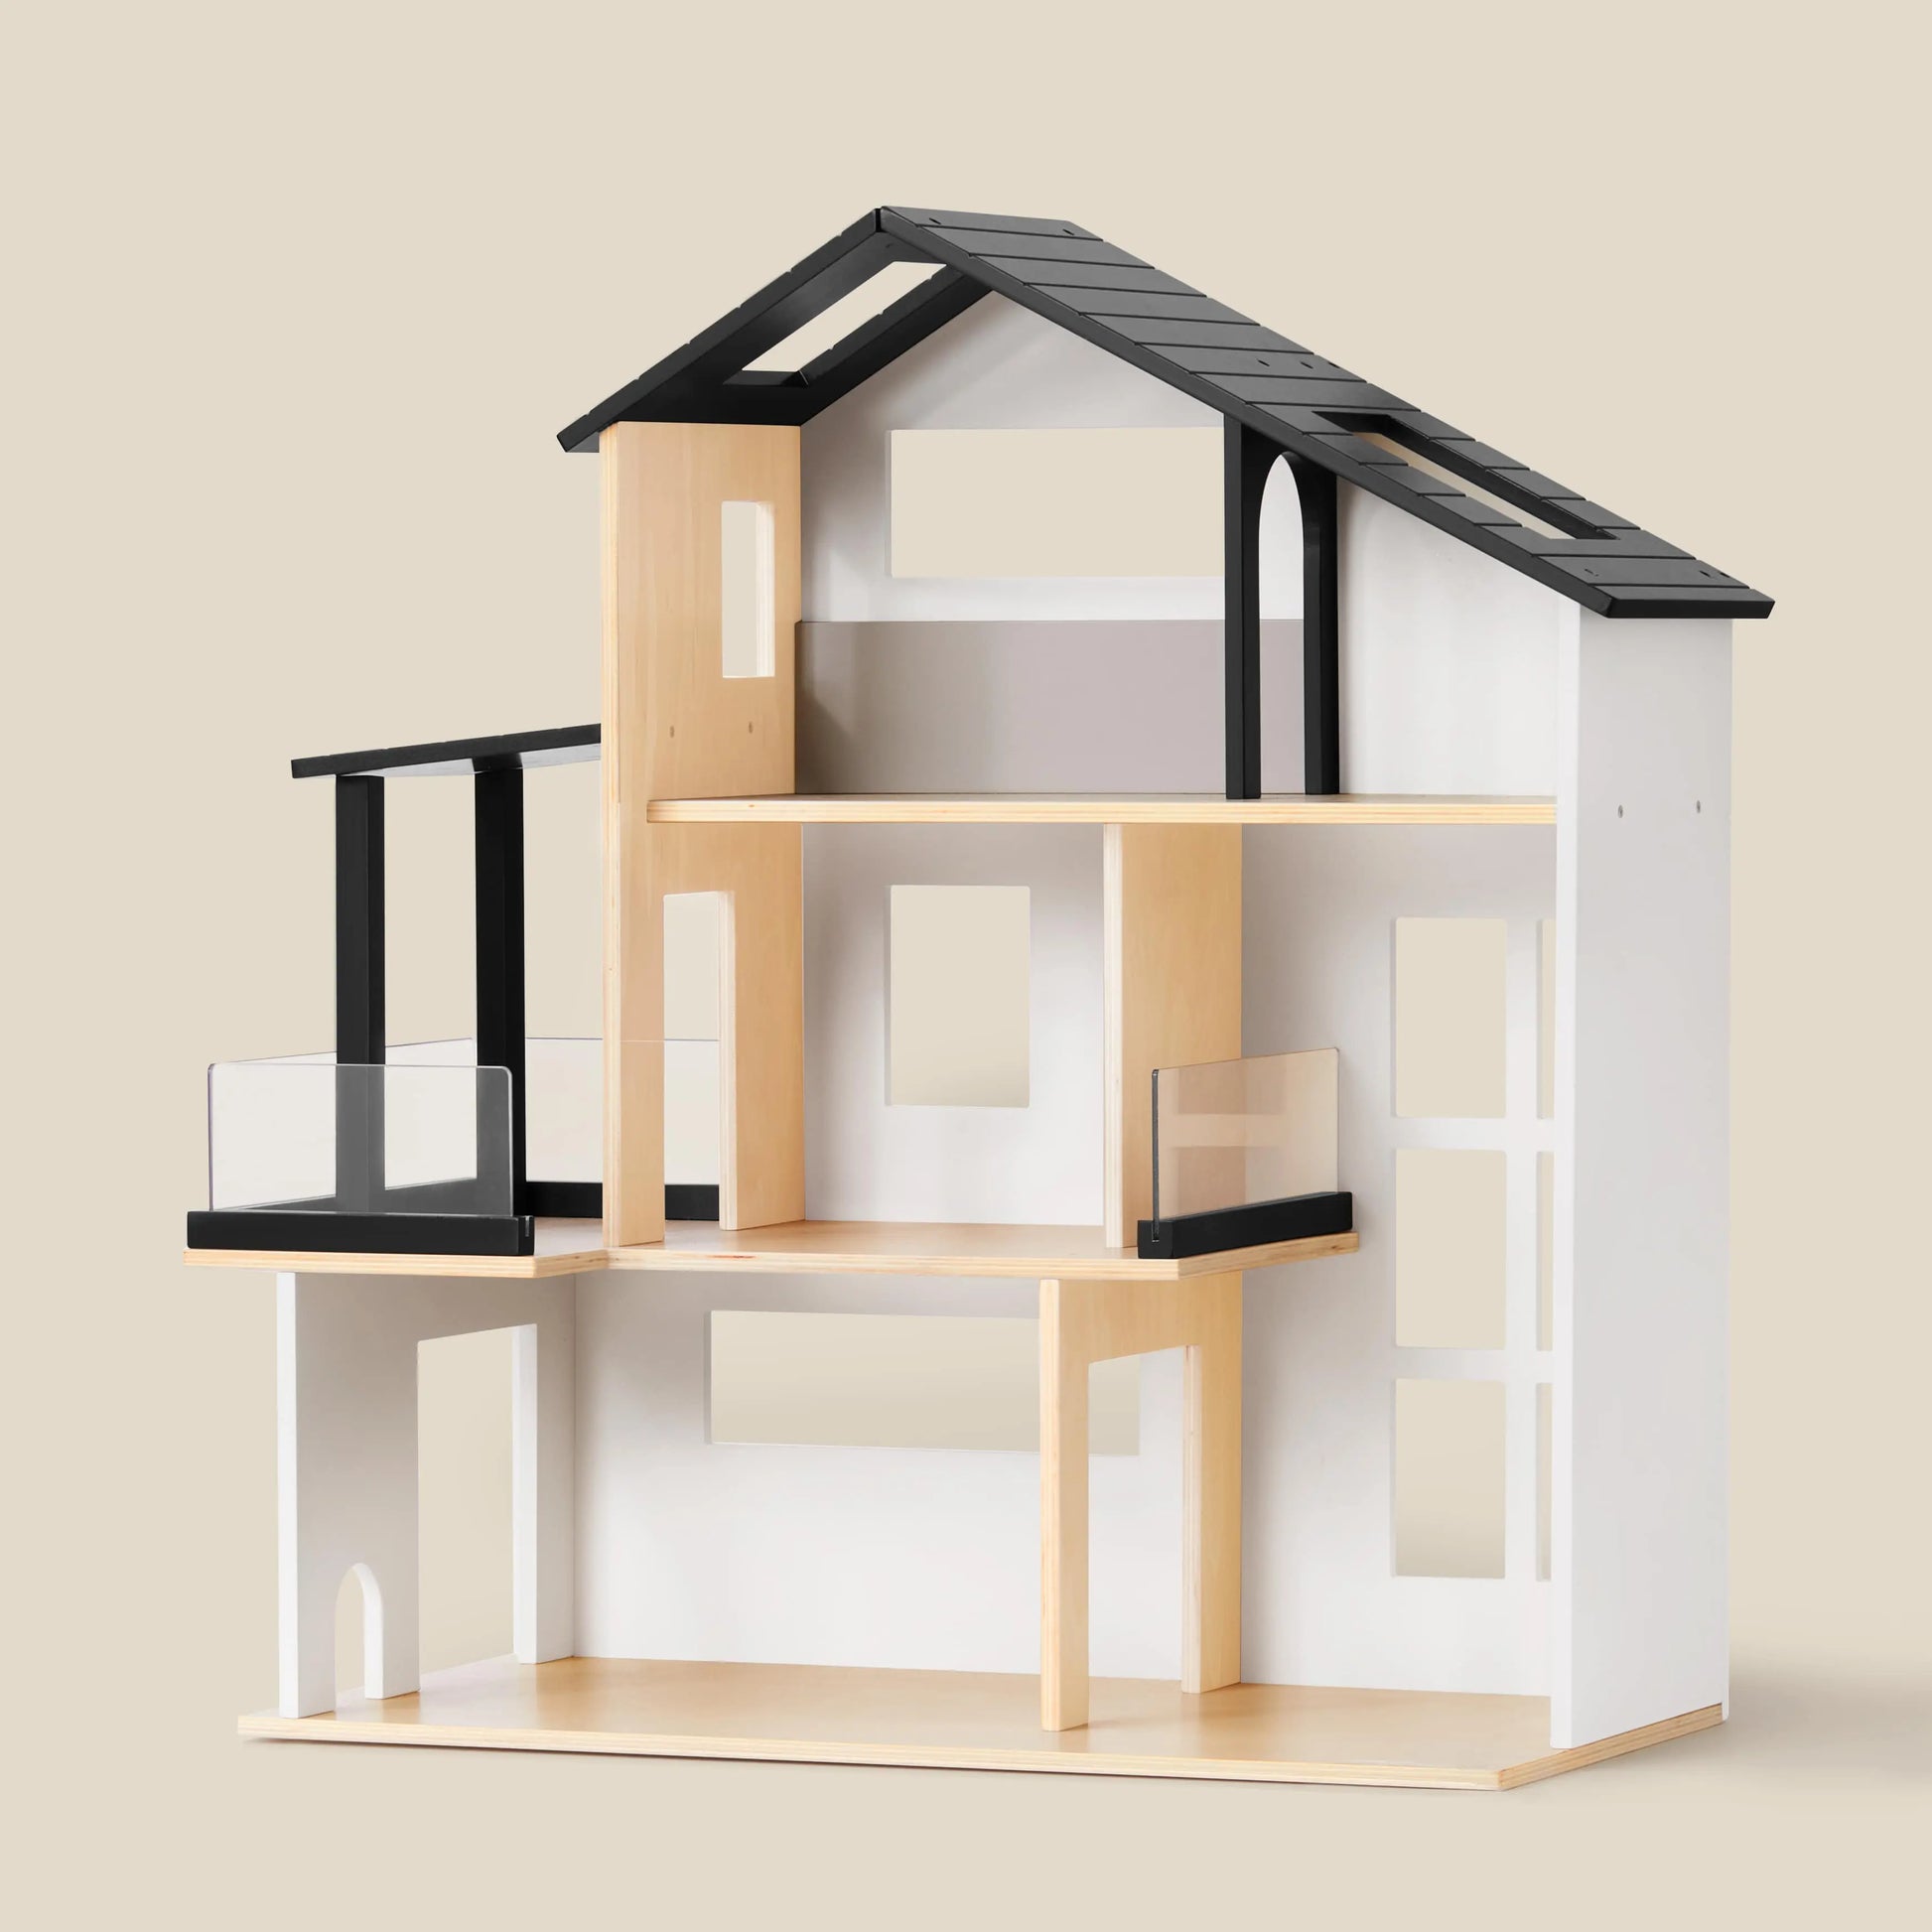 Modern Dollhouse with garage, Wooden dollhouse